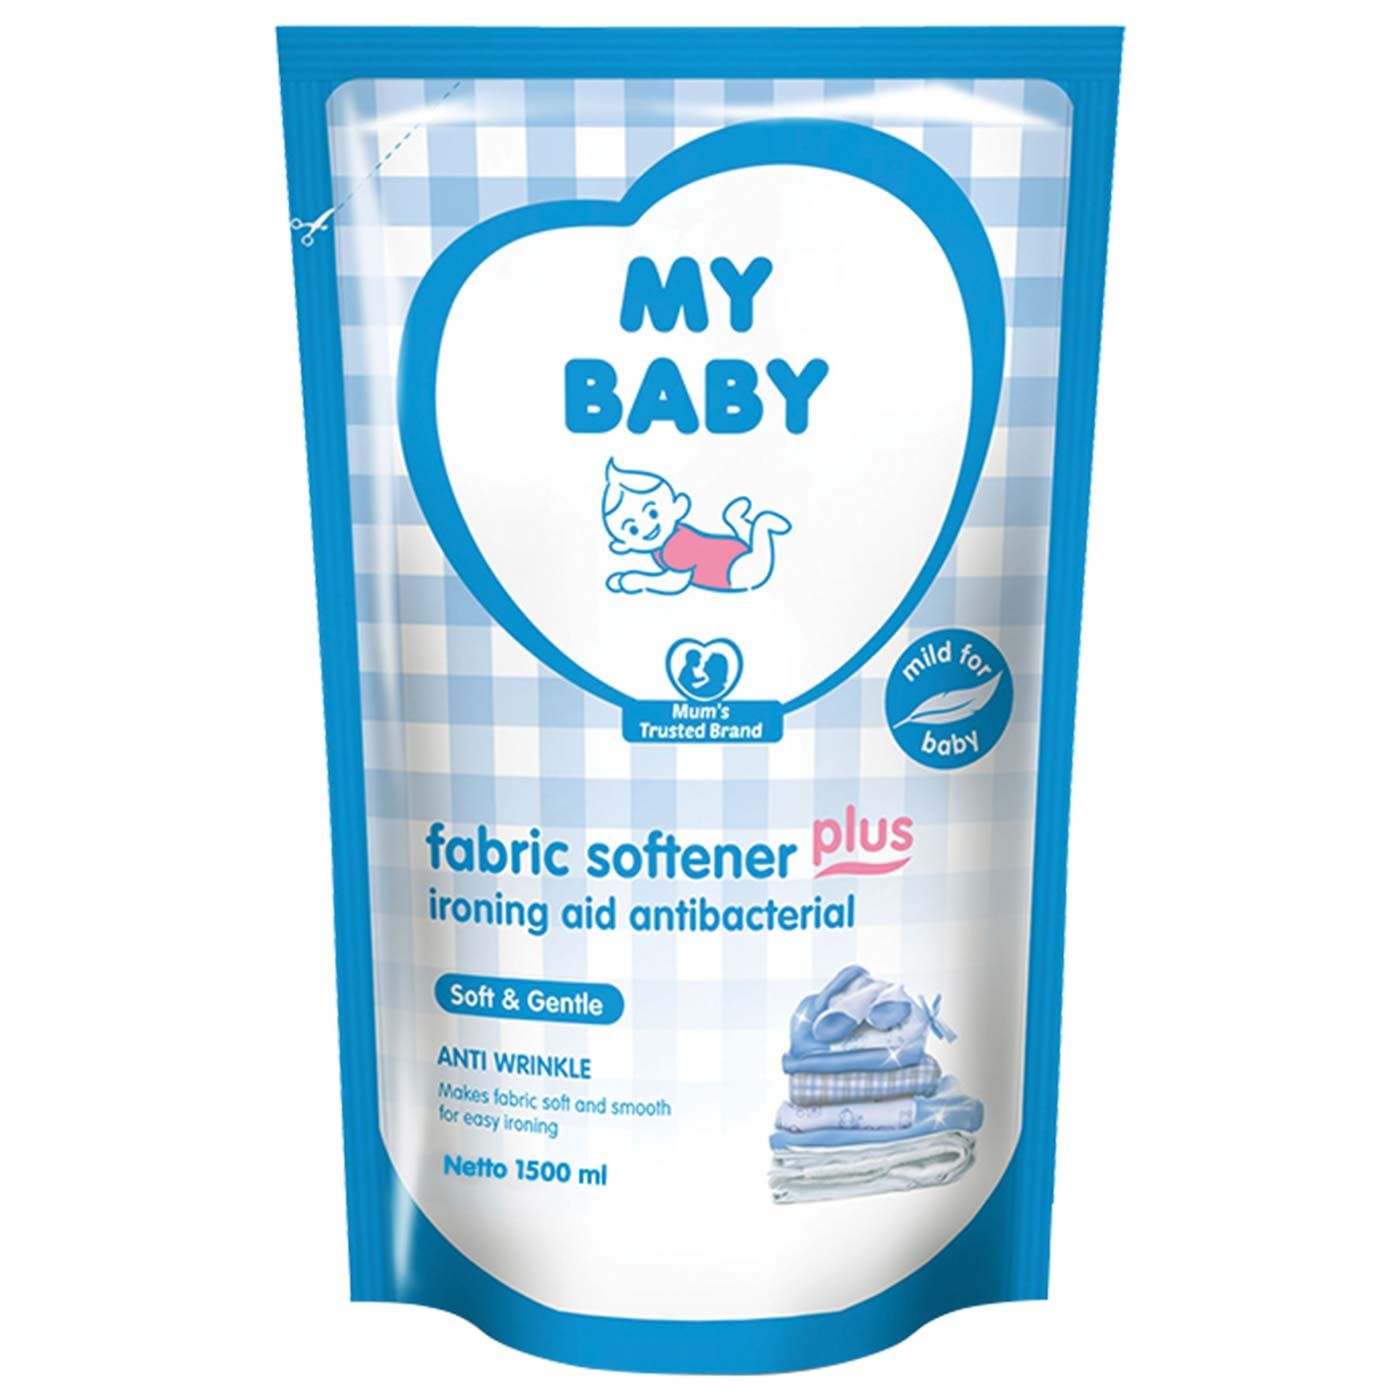 My Baby fabric Softener Plus Ironing Aid Soft&Gentle 1500ml - 1